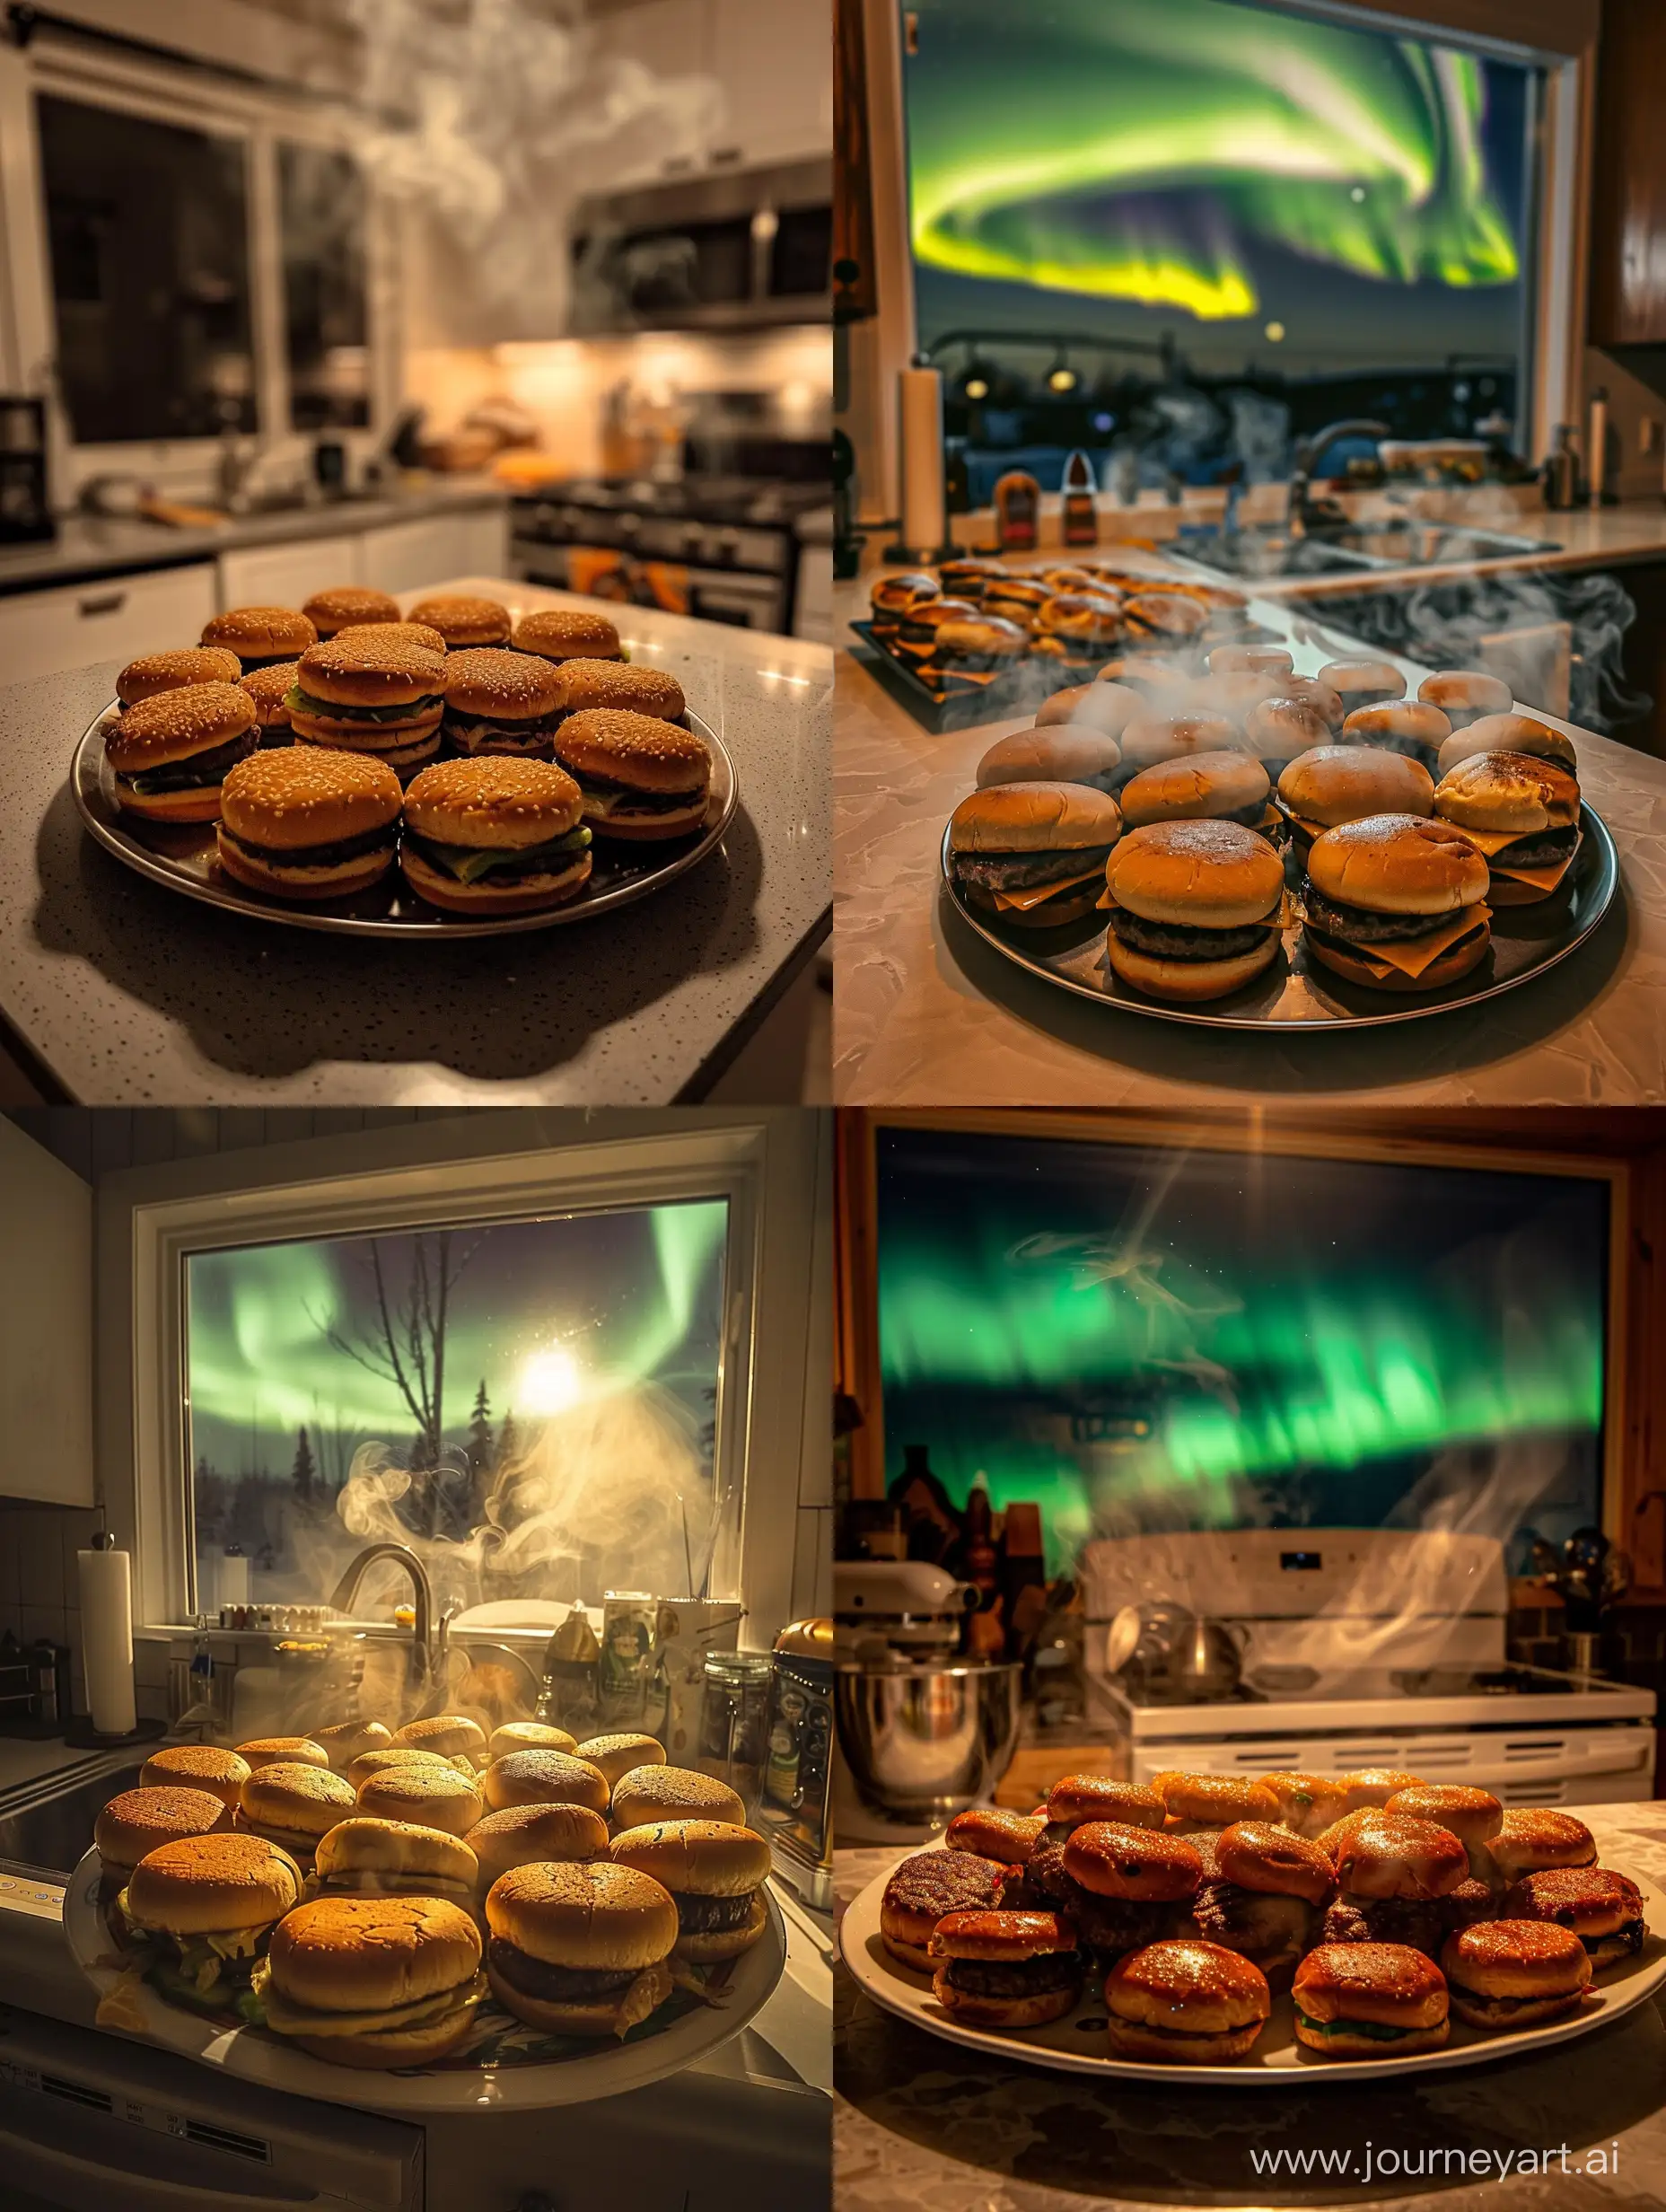 Vibrant-Northern-Lights-Illuminating-a-Kitchen-Scene-with-Steaming-Hamburgers